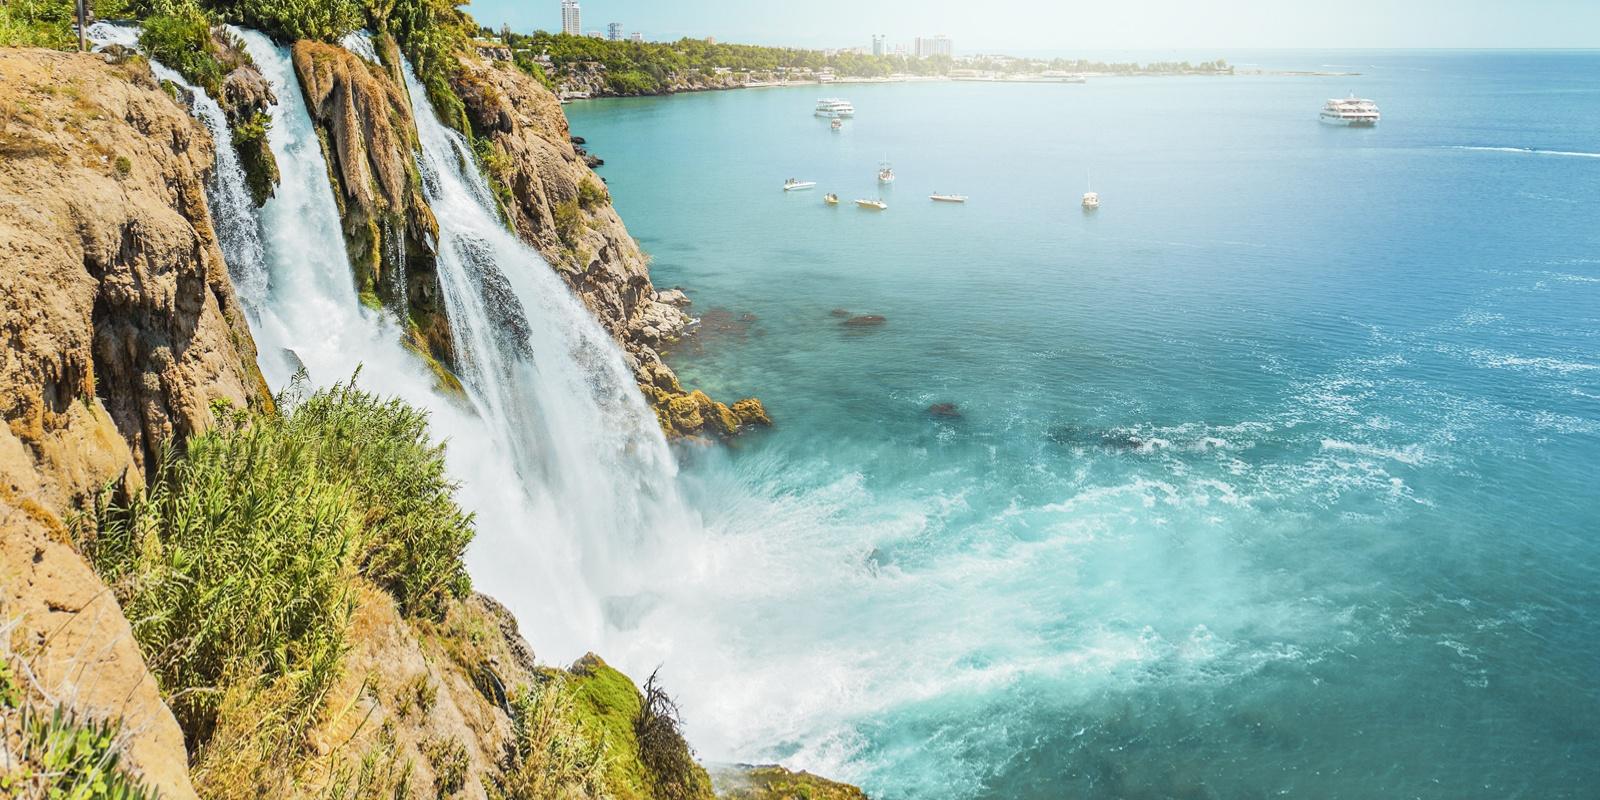 Image of a waterfall Turkey in June